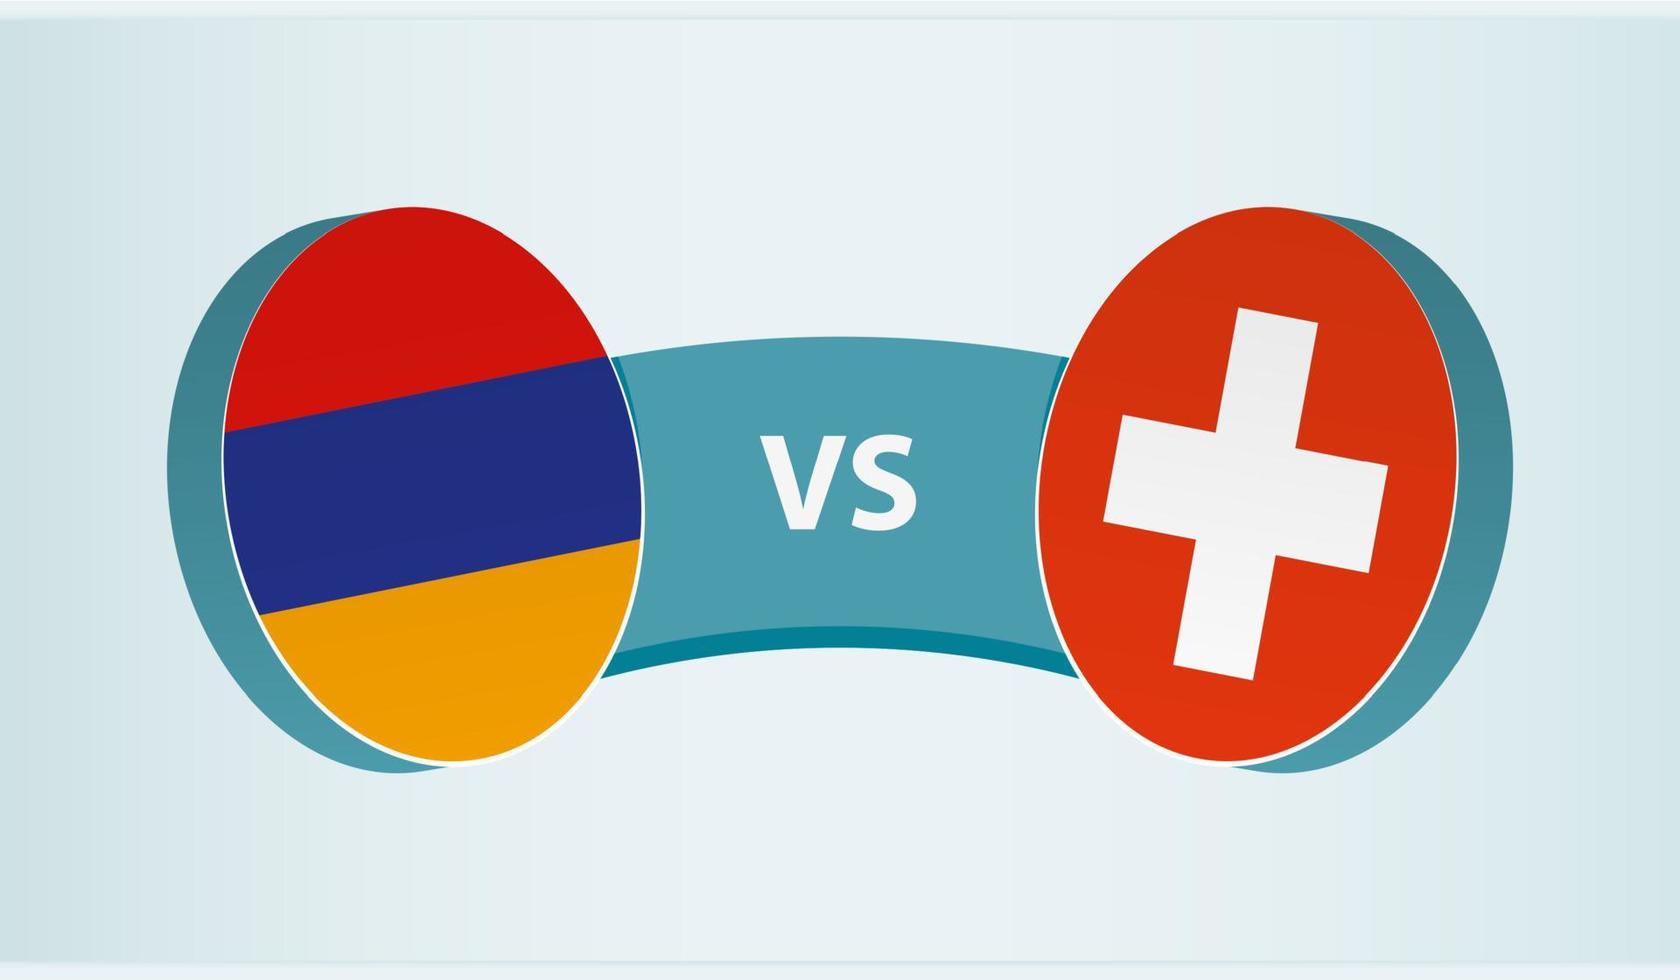 Armenia versus Switzerland, team sports competition concept. vector